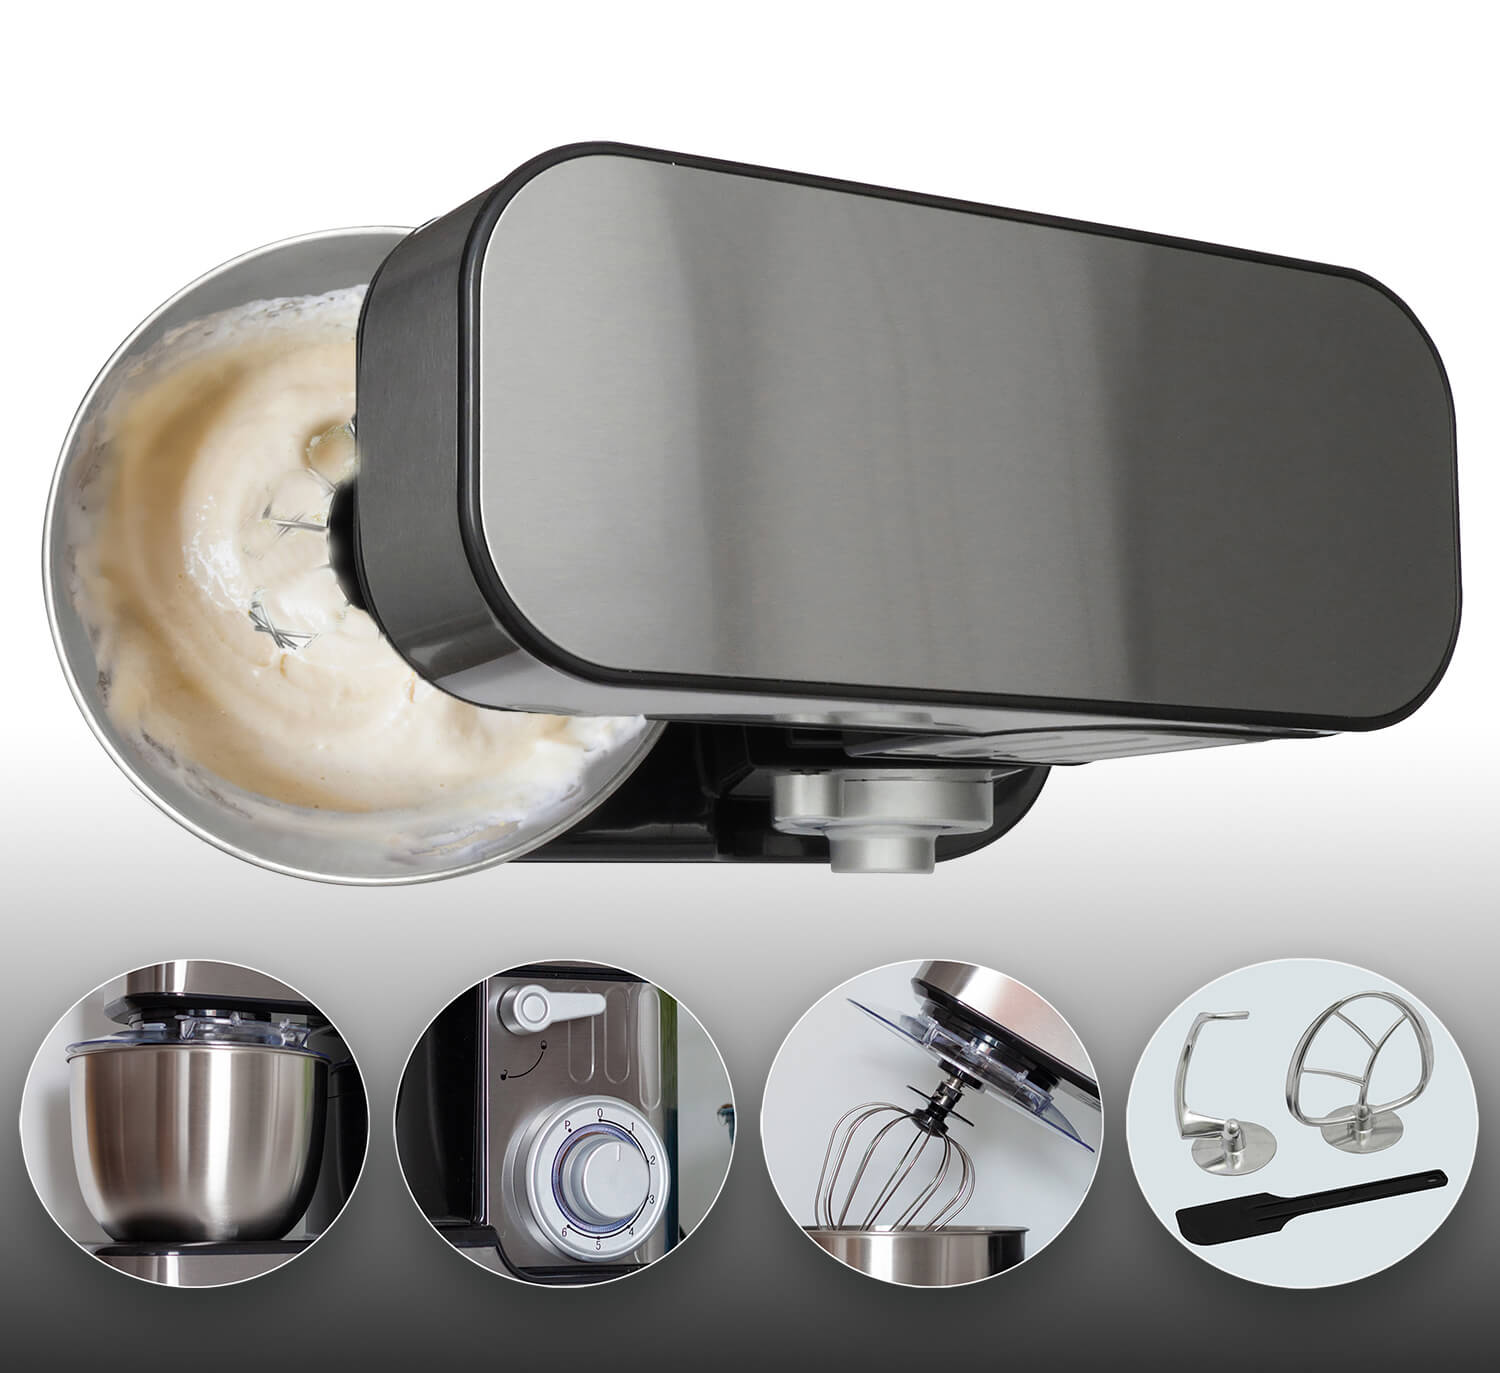 Dough kneading machine 1300 watt | 5 liter stainless steel bowl